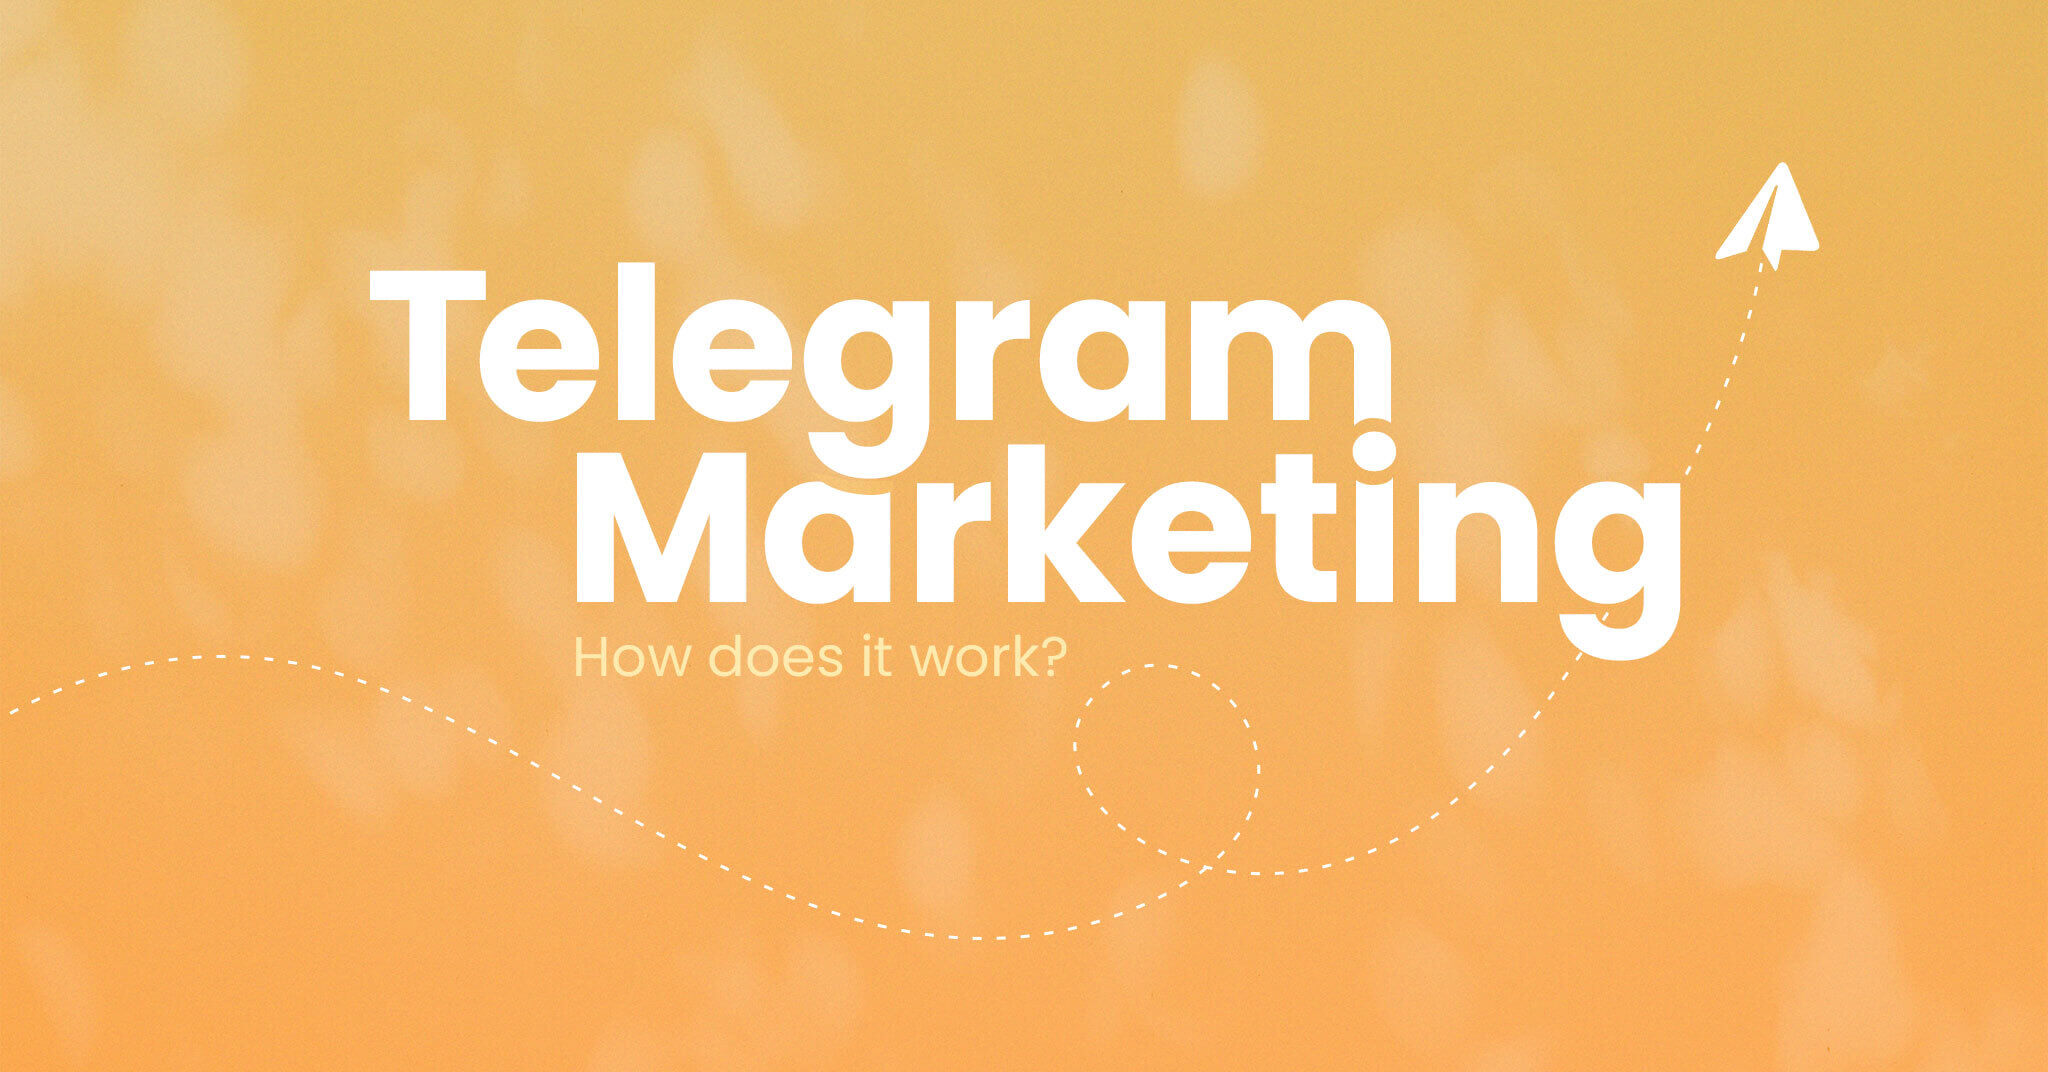 What is Telegram Marketing?